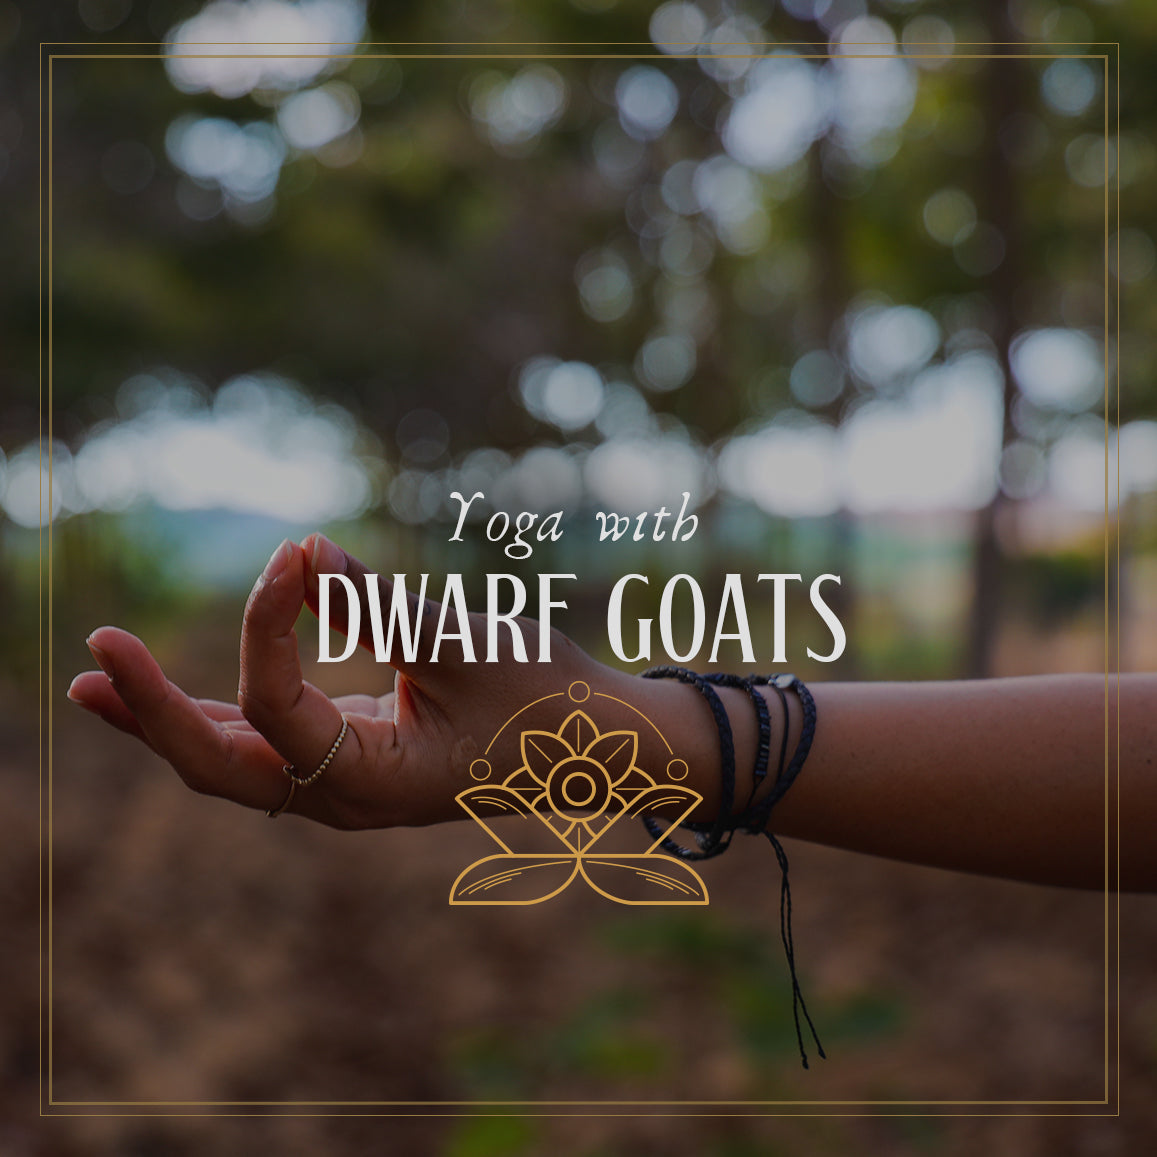 Yoga with dwarf goats